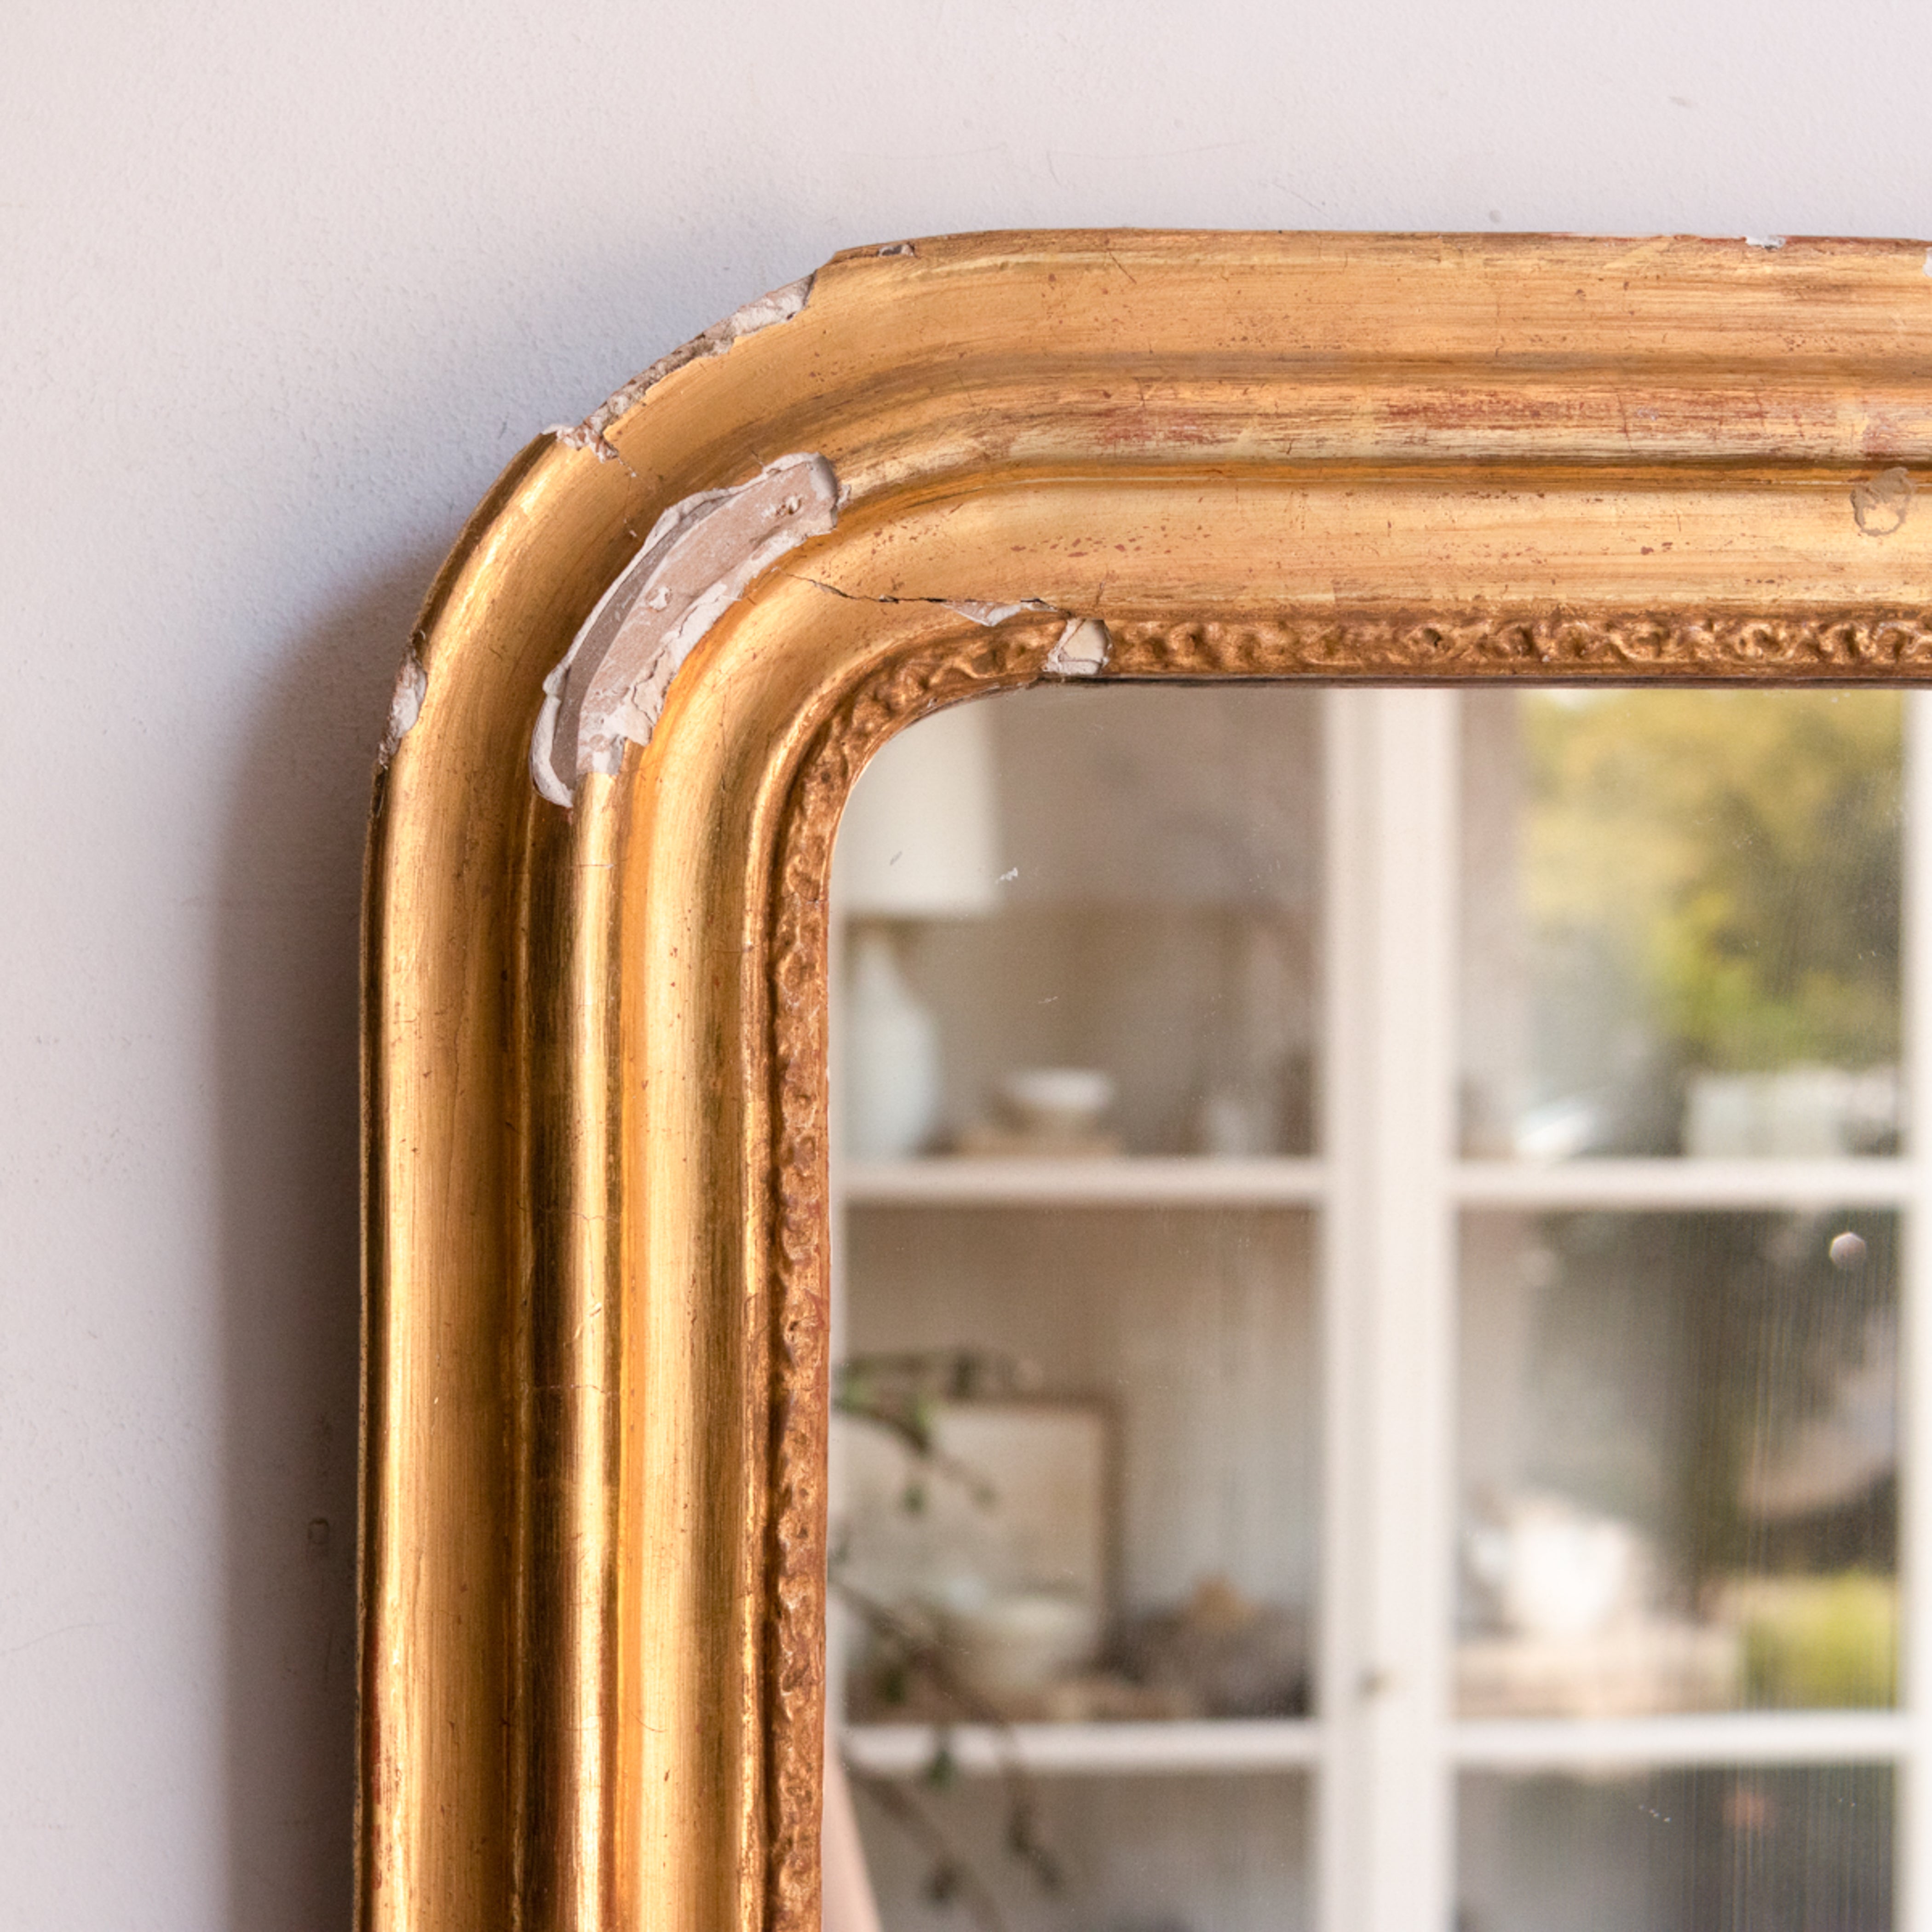 gold louis philippe mirror